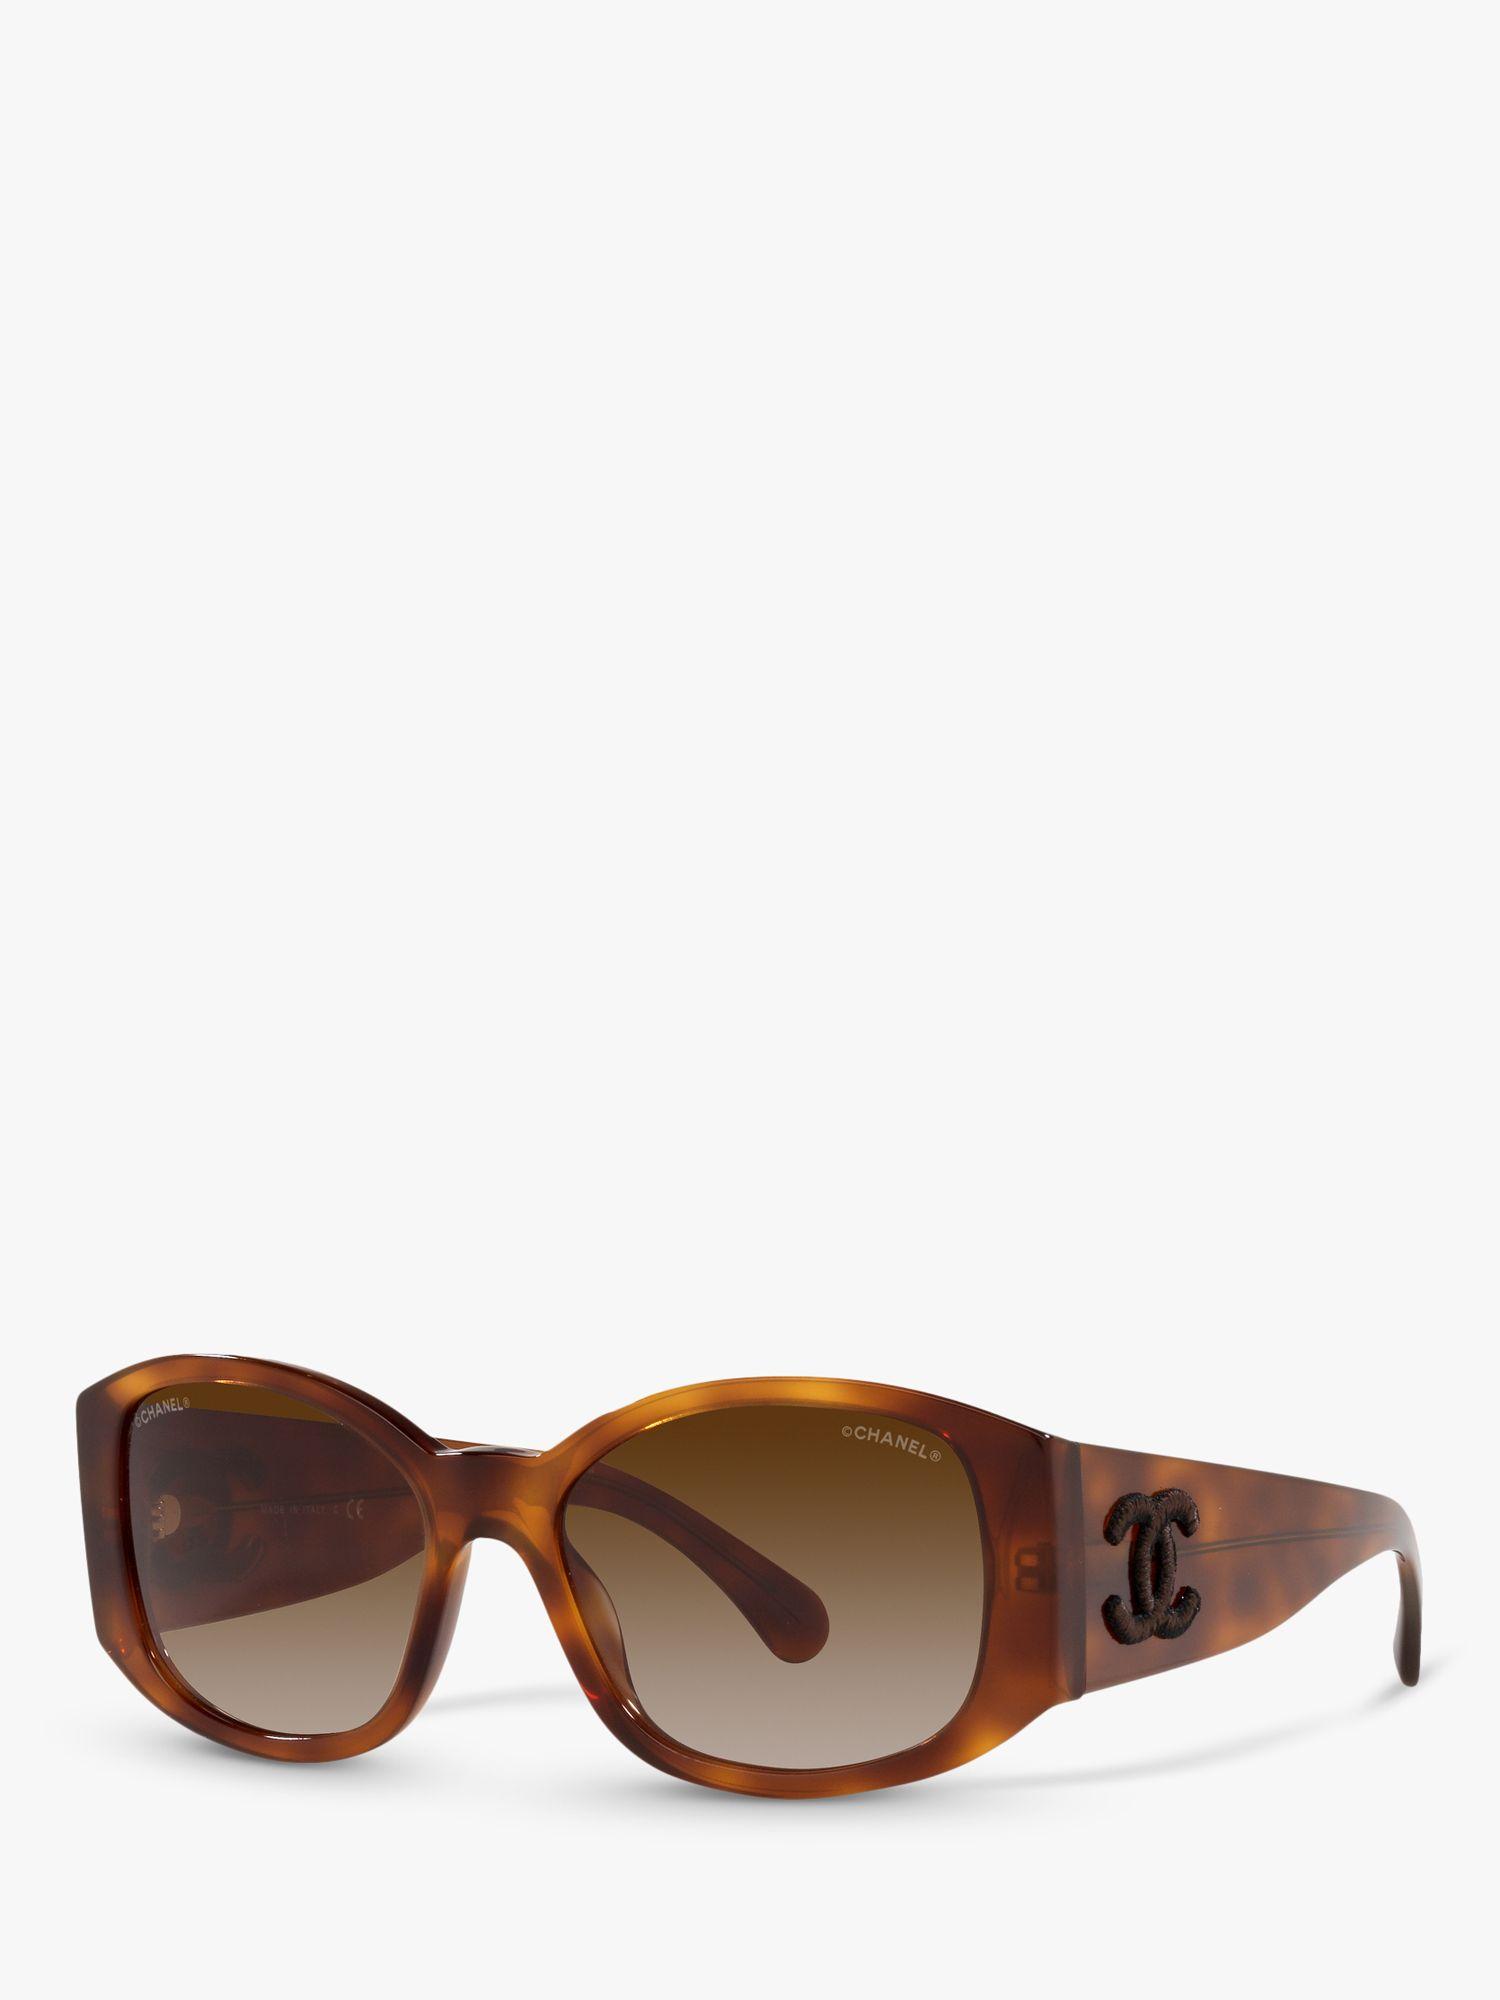 Chanel Irregular Sunglasses Ch5450 Havana/brown Gradient